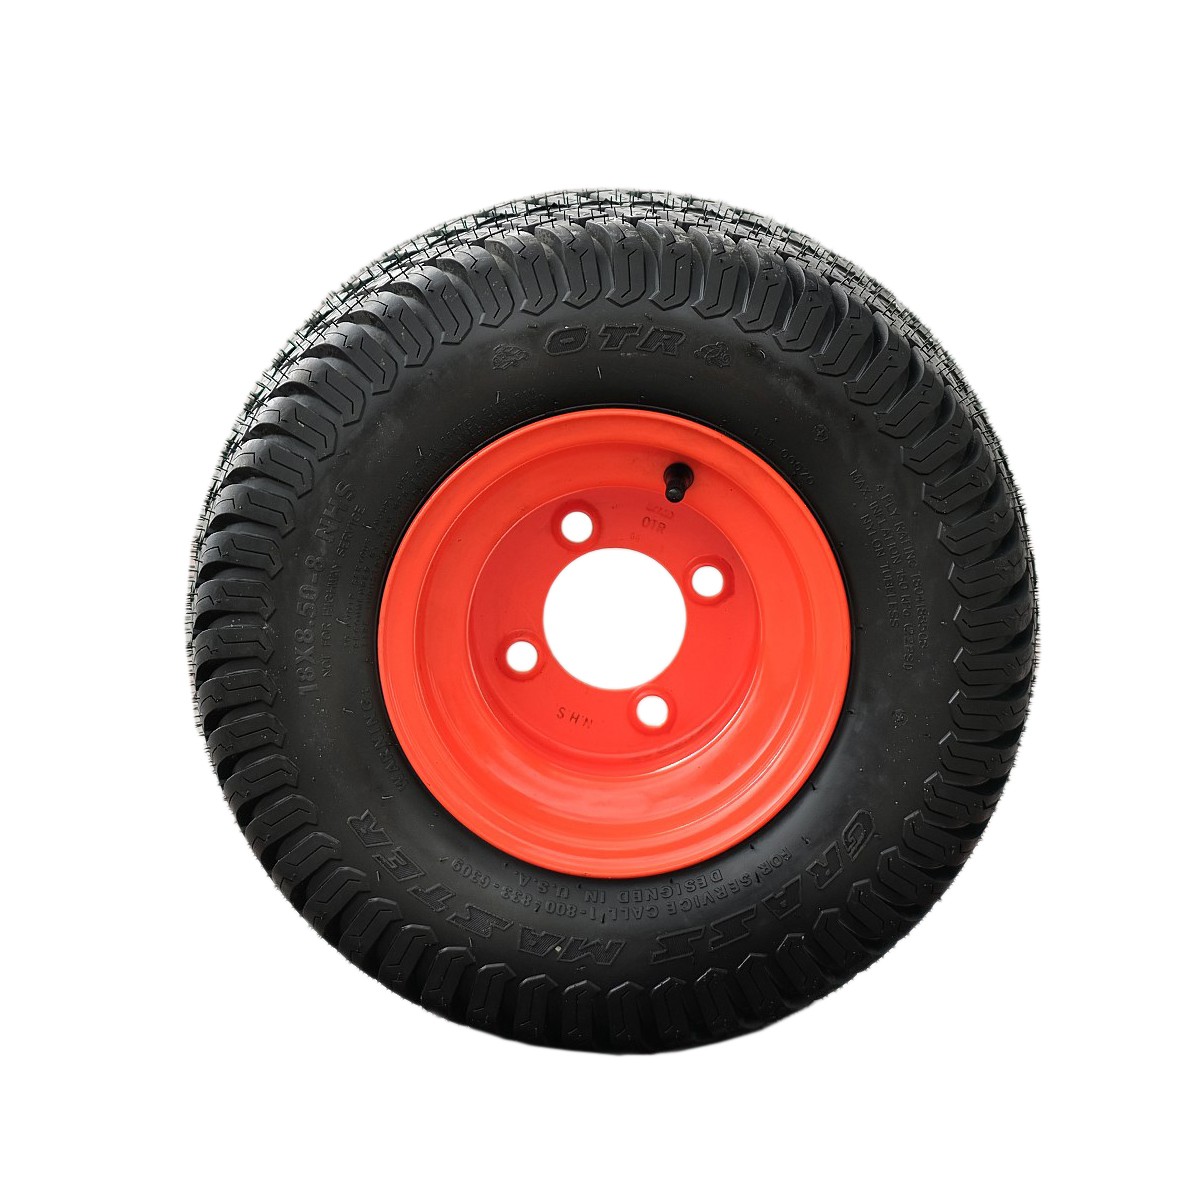 Complete wheel 18x8.50-8 / grass tire